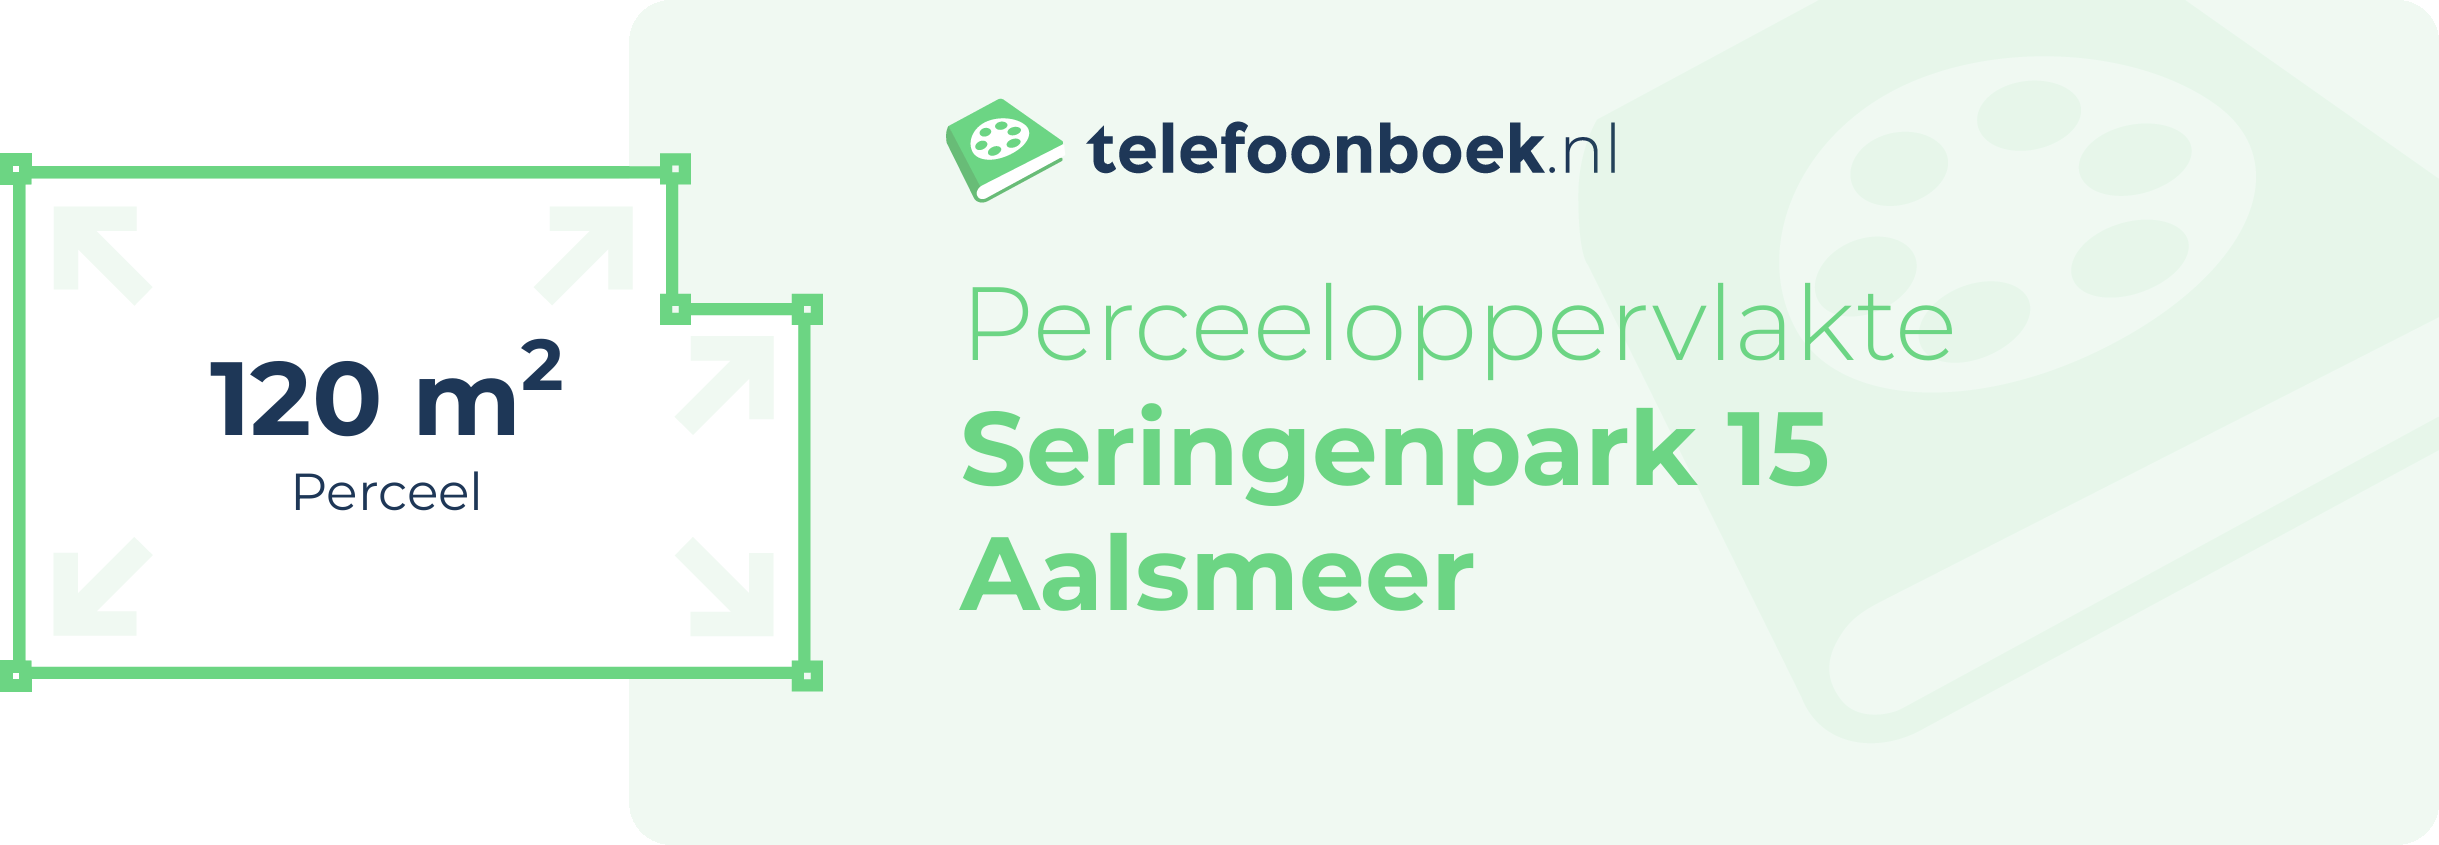 Perceeloppervlakte Seringenpark 15 Aalsmeer